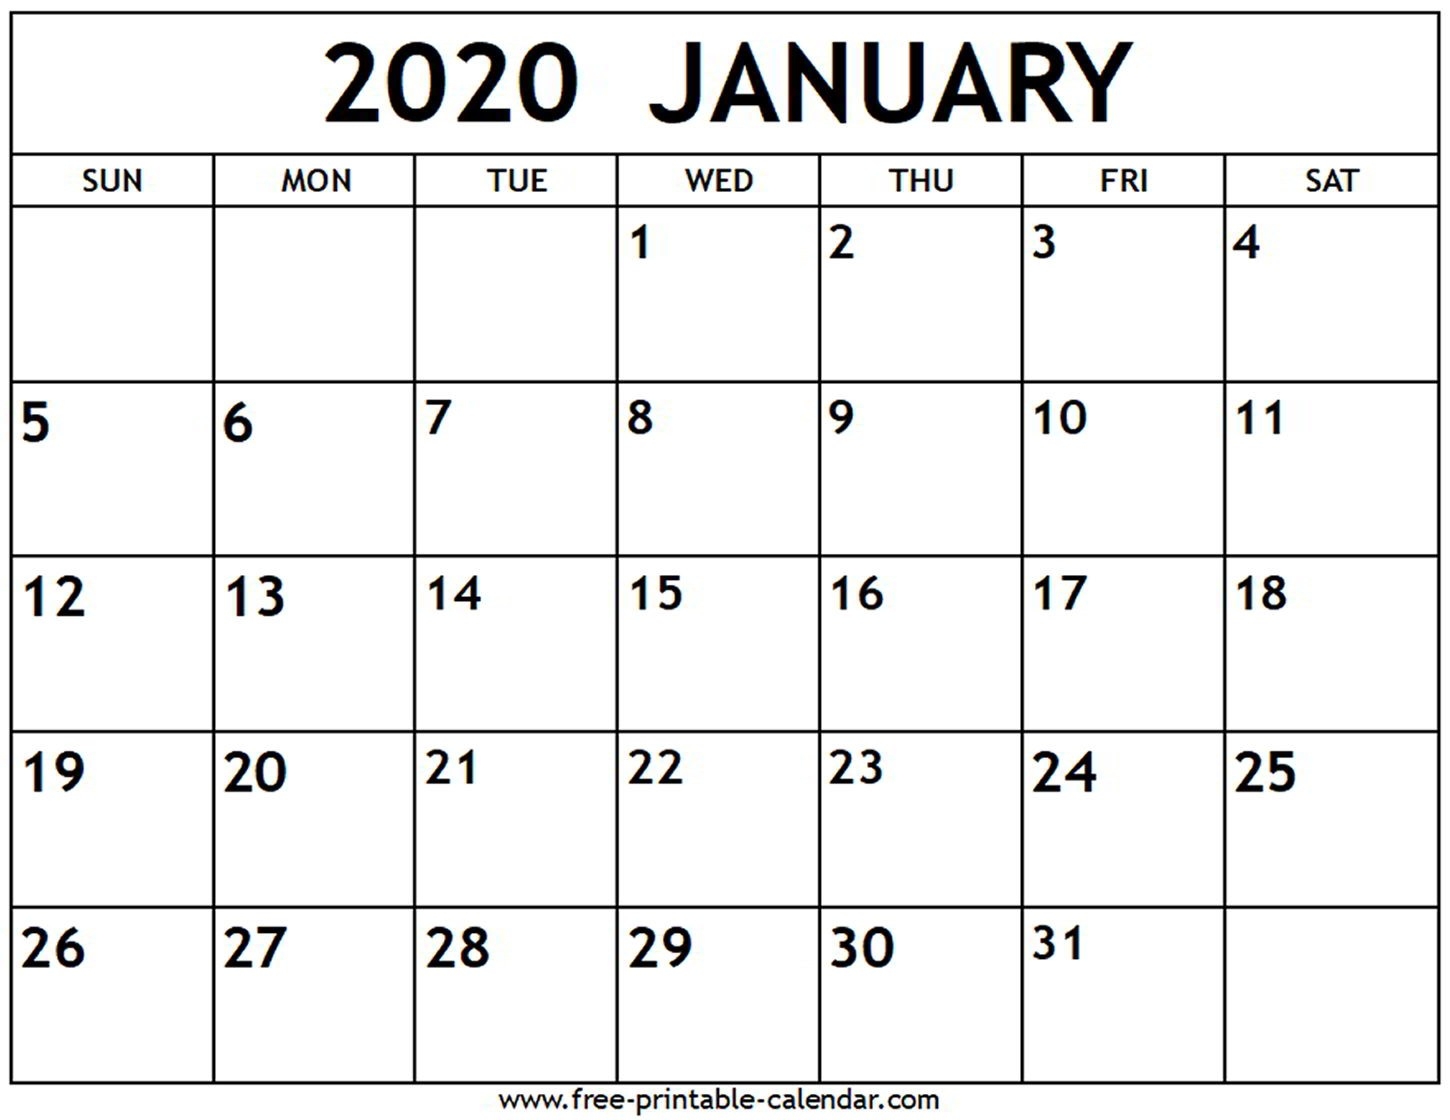 January 2020 Calendar - Free-Printable-Calendar-January 2020 Calendar Image